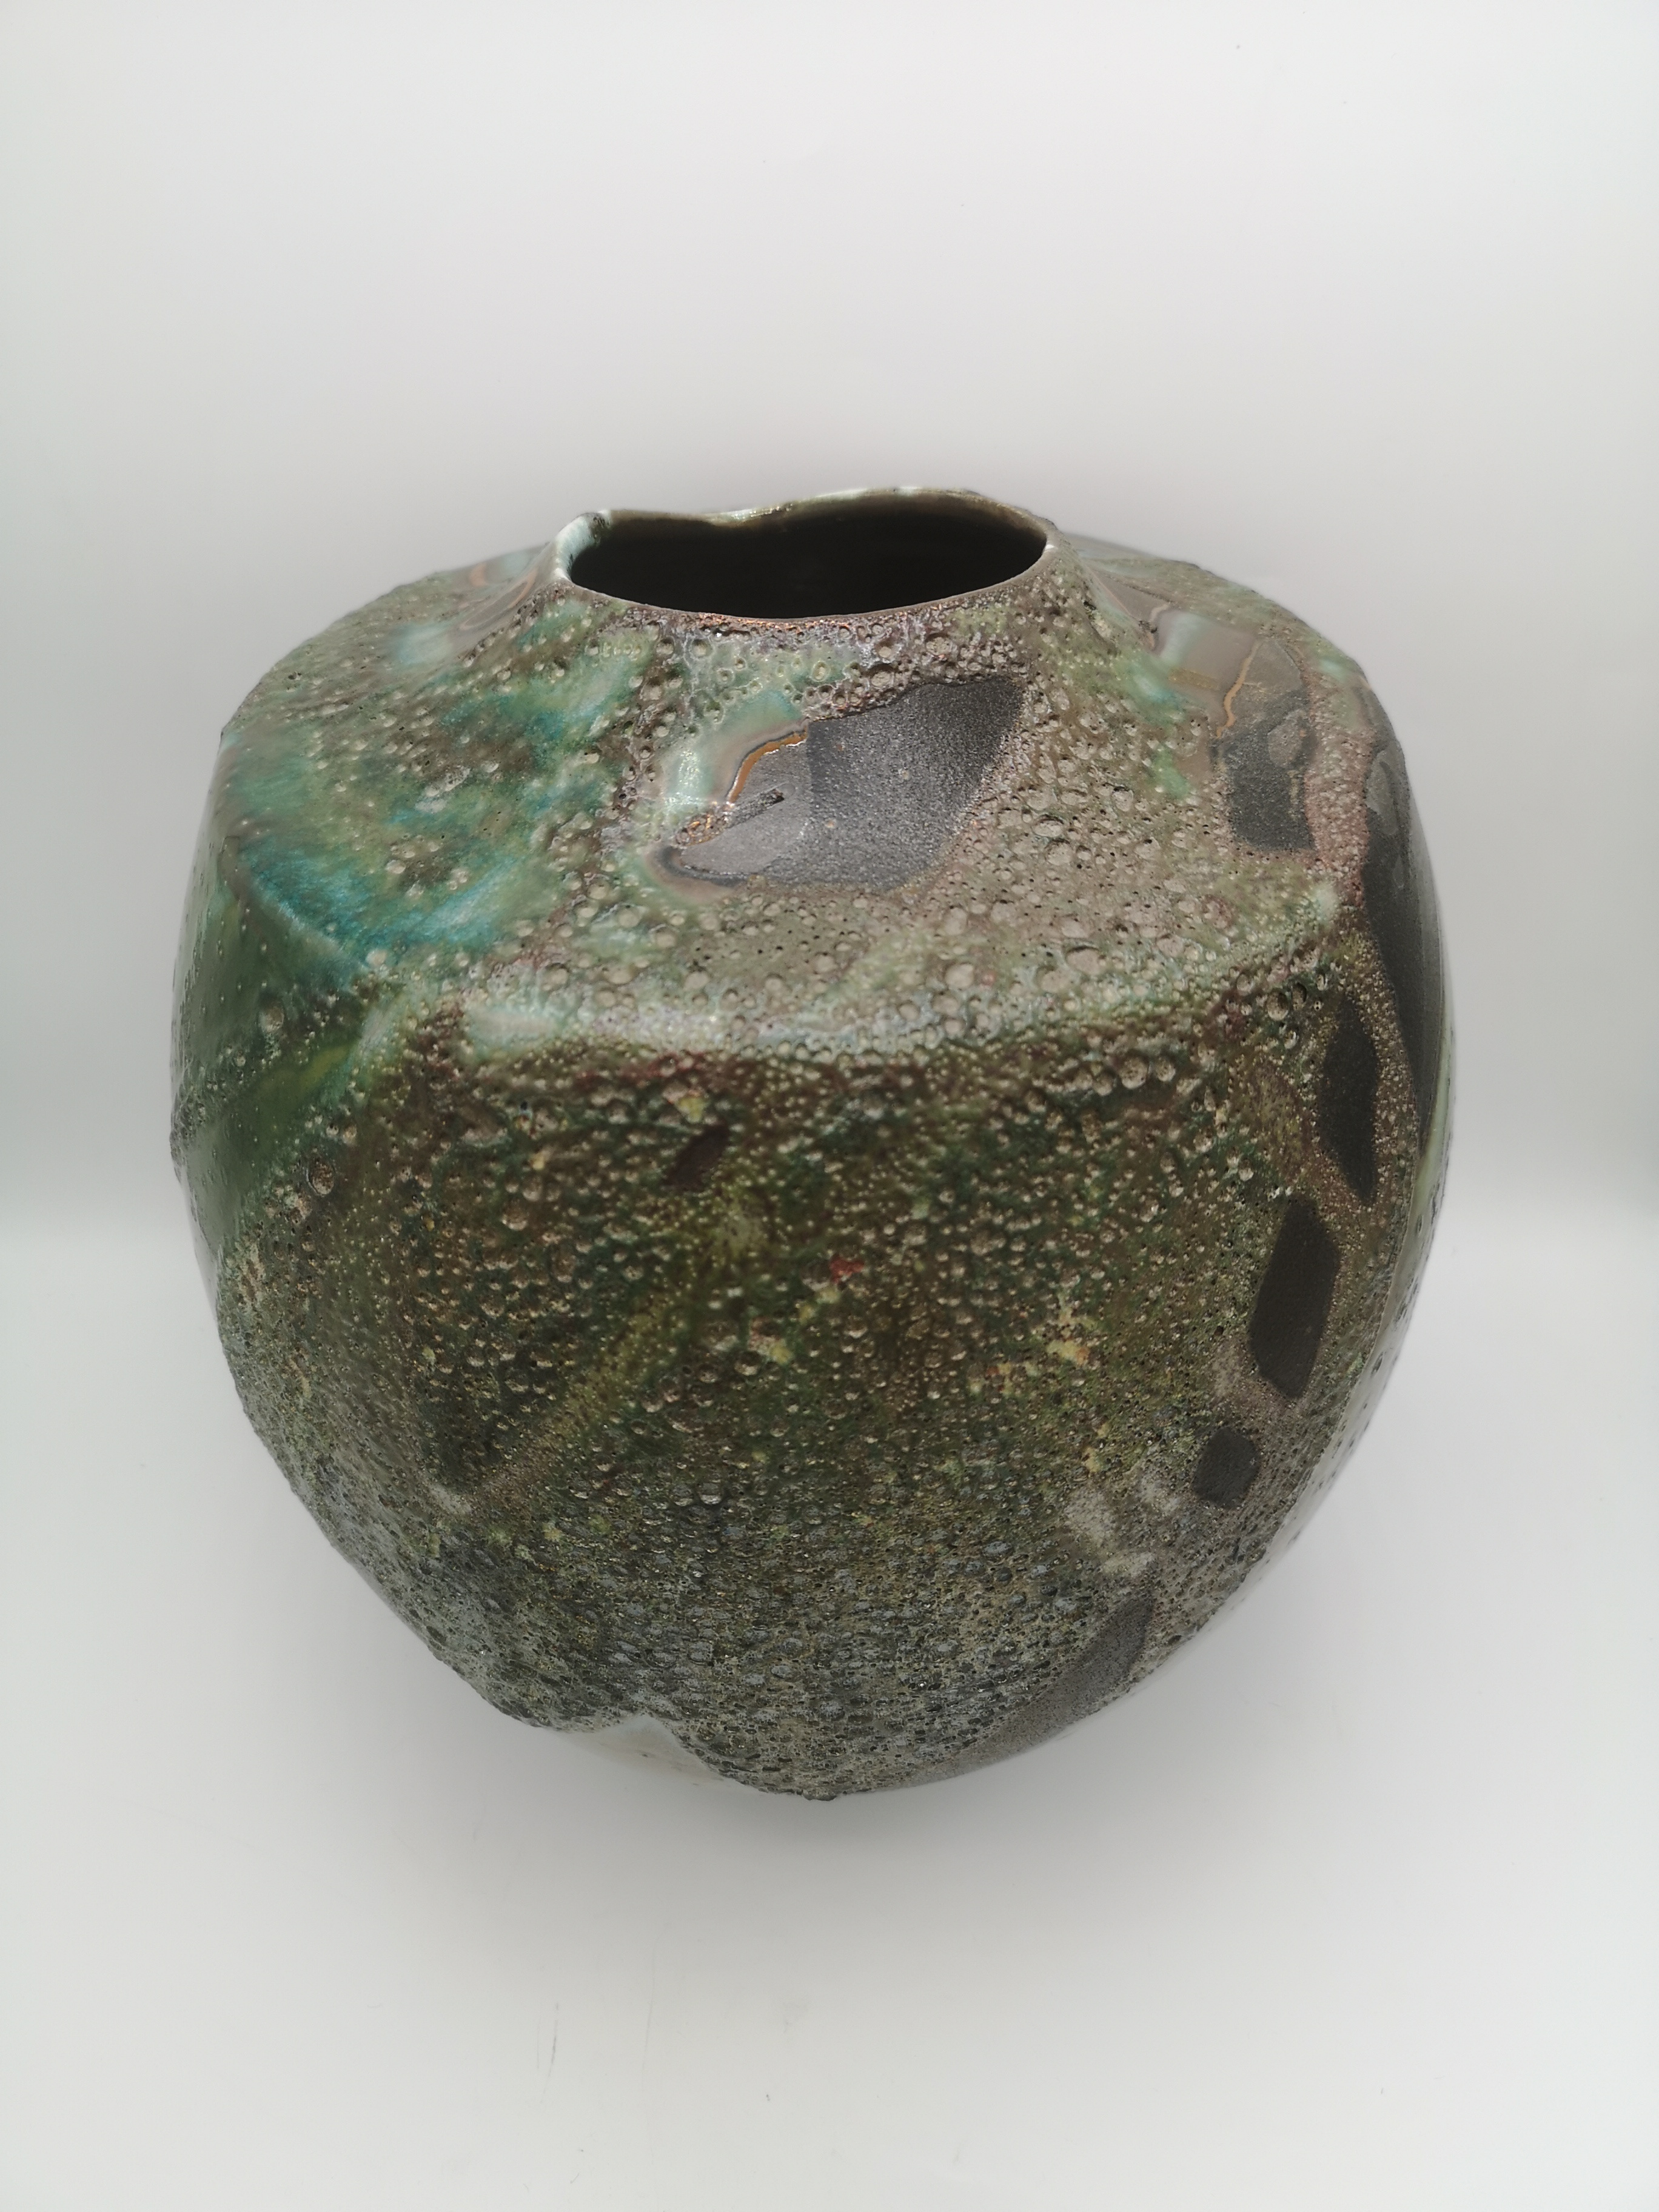 Ceramic raku vase by Tony Evans - Image 3 of 8